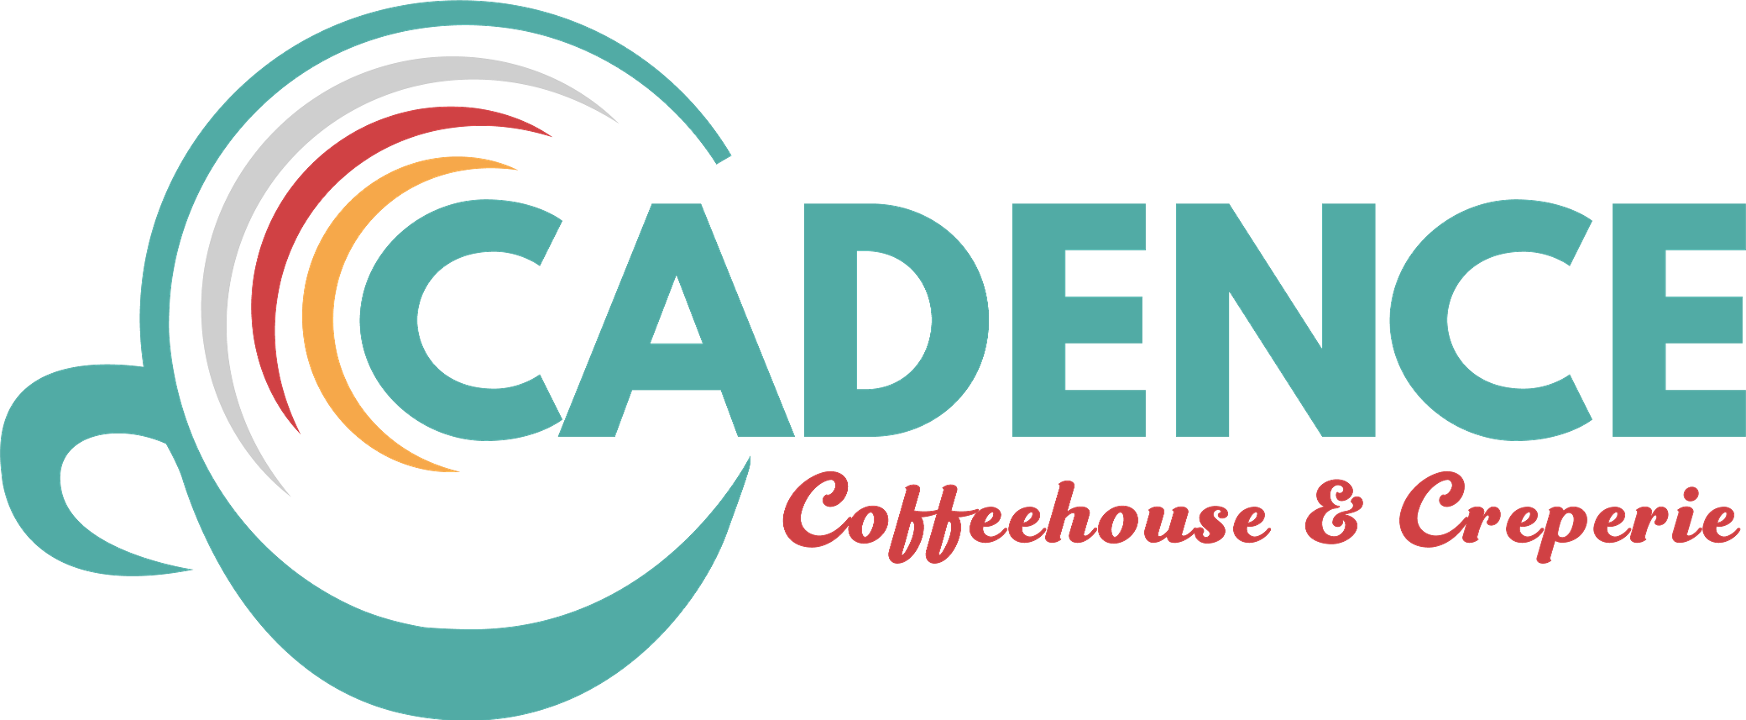 Cadence Coffee House & Creperie